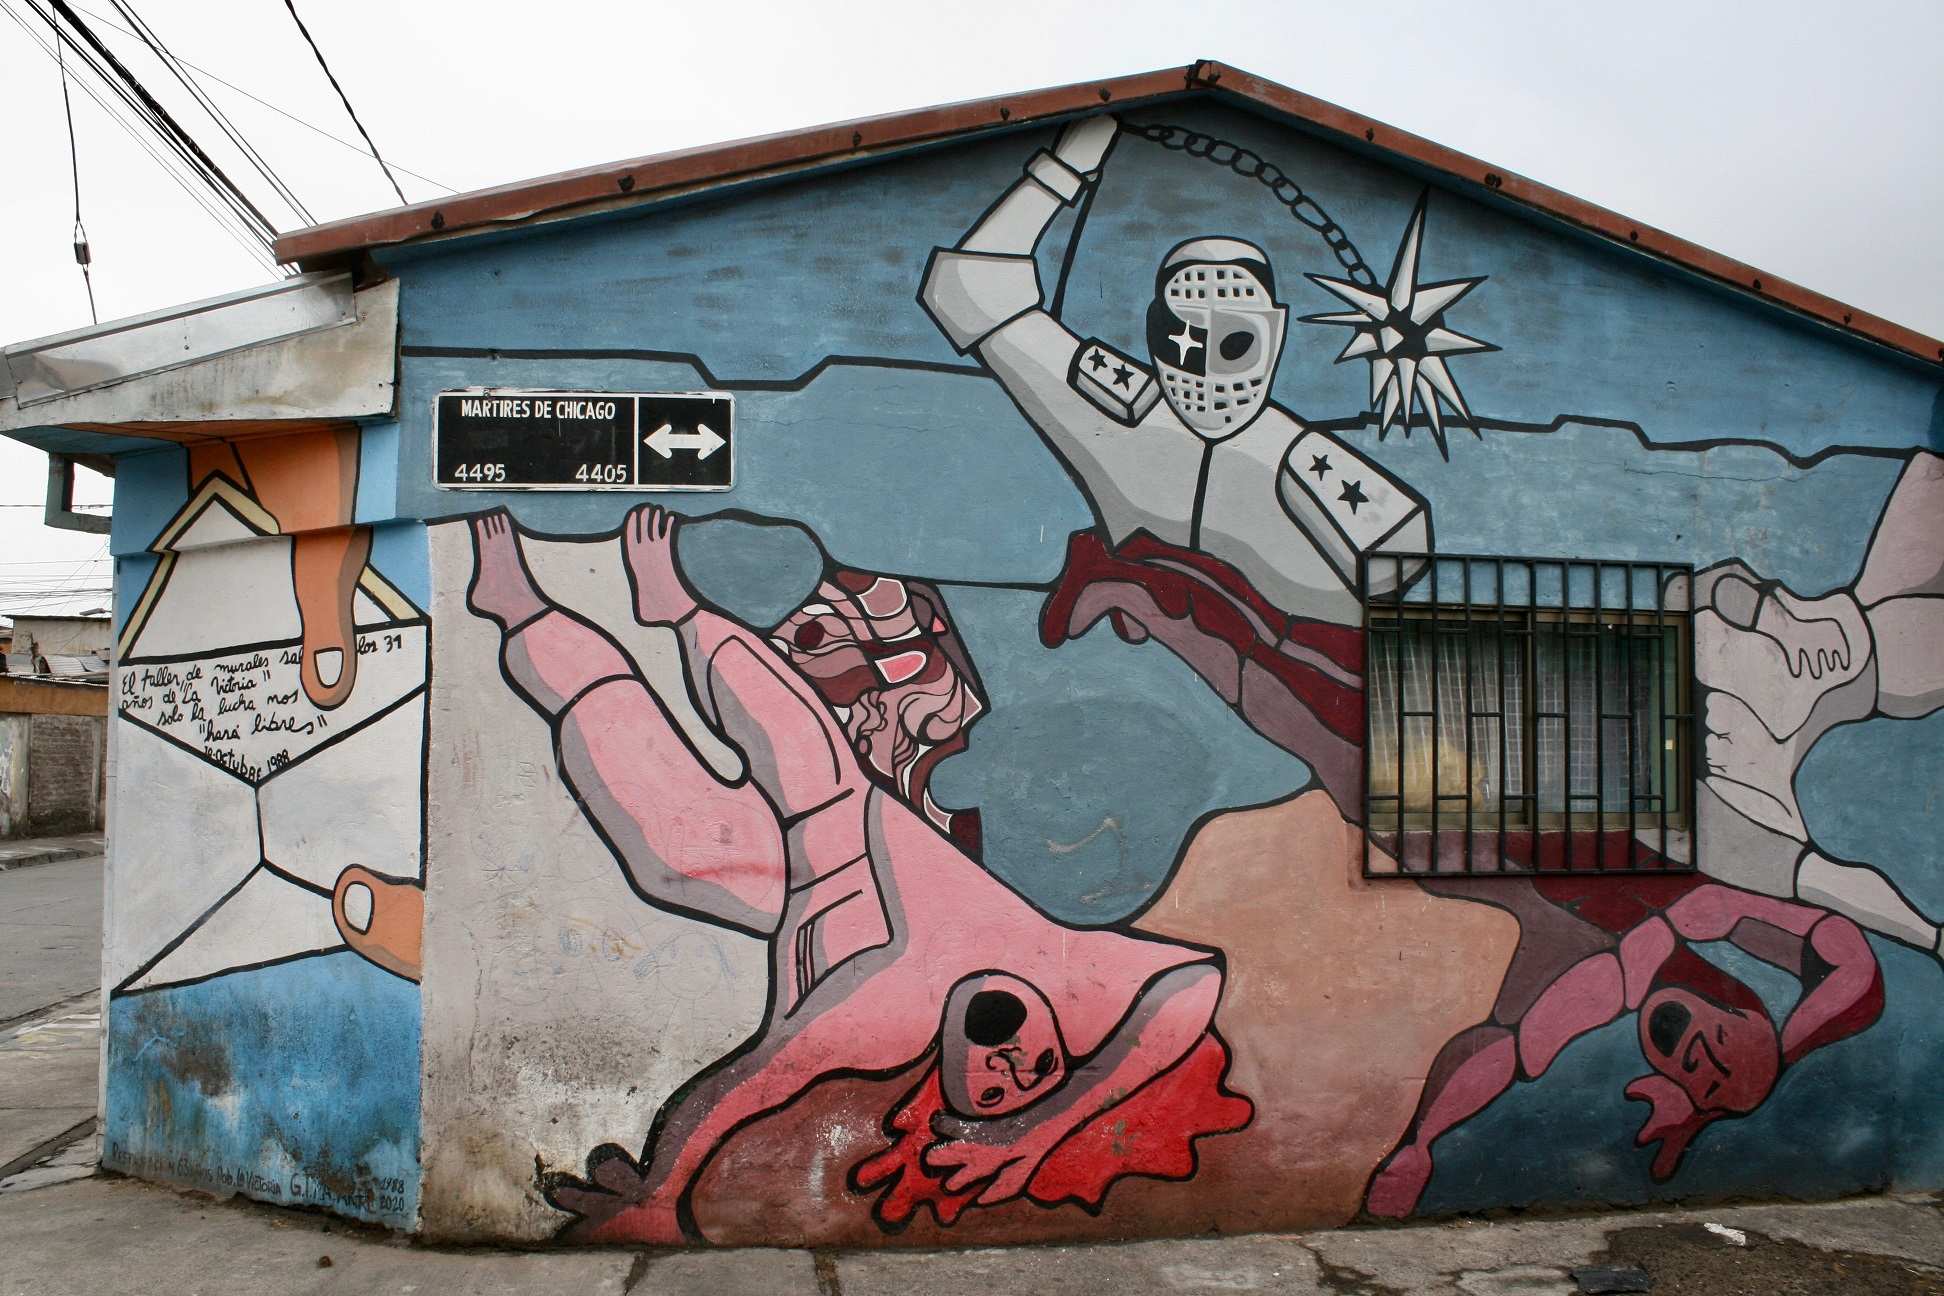 Hausmauerngemälde "Gewalt" in Santiago de Chile (Foto: Jürgen Schübelin)